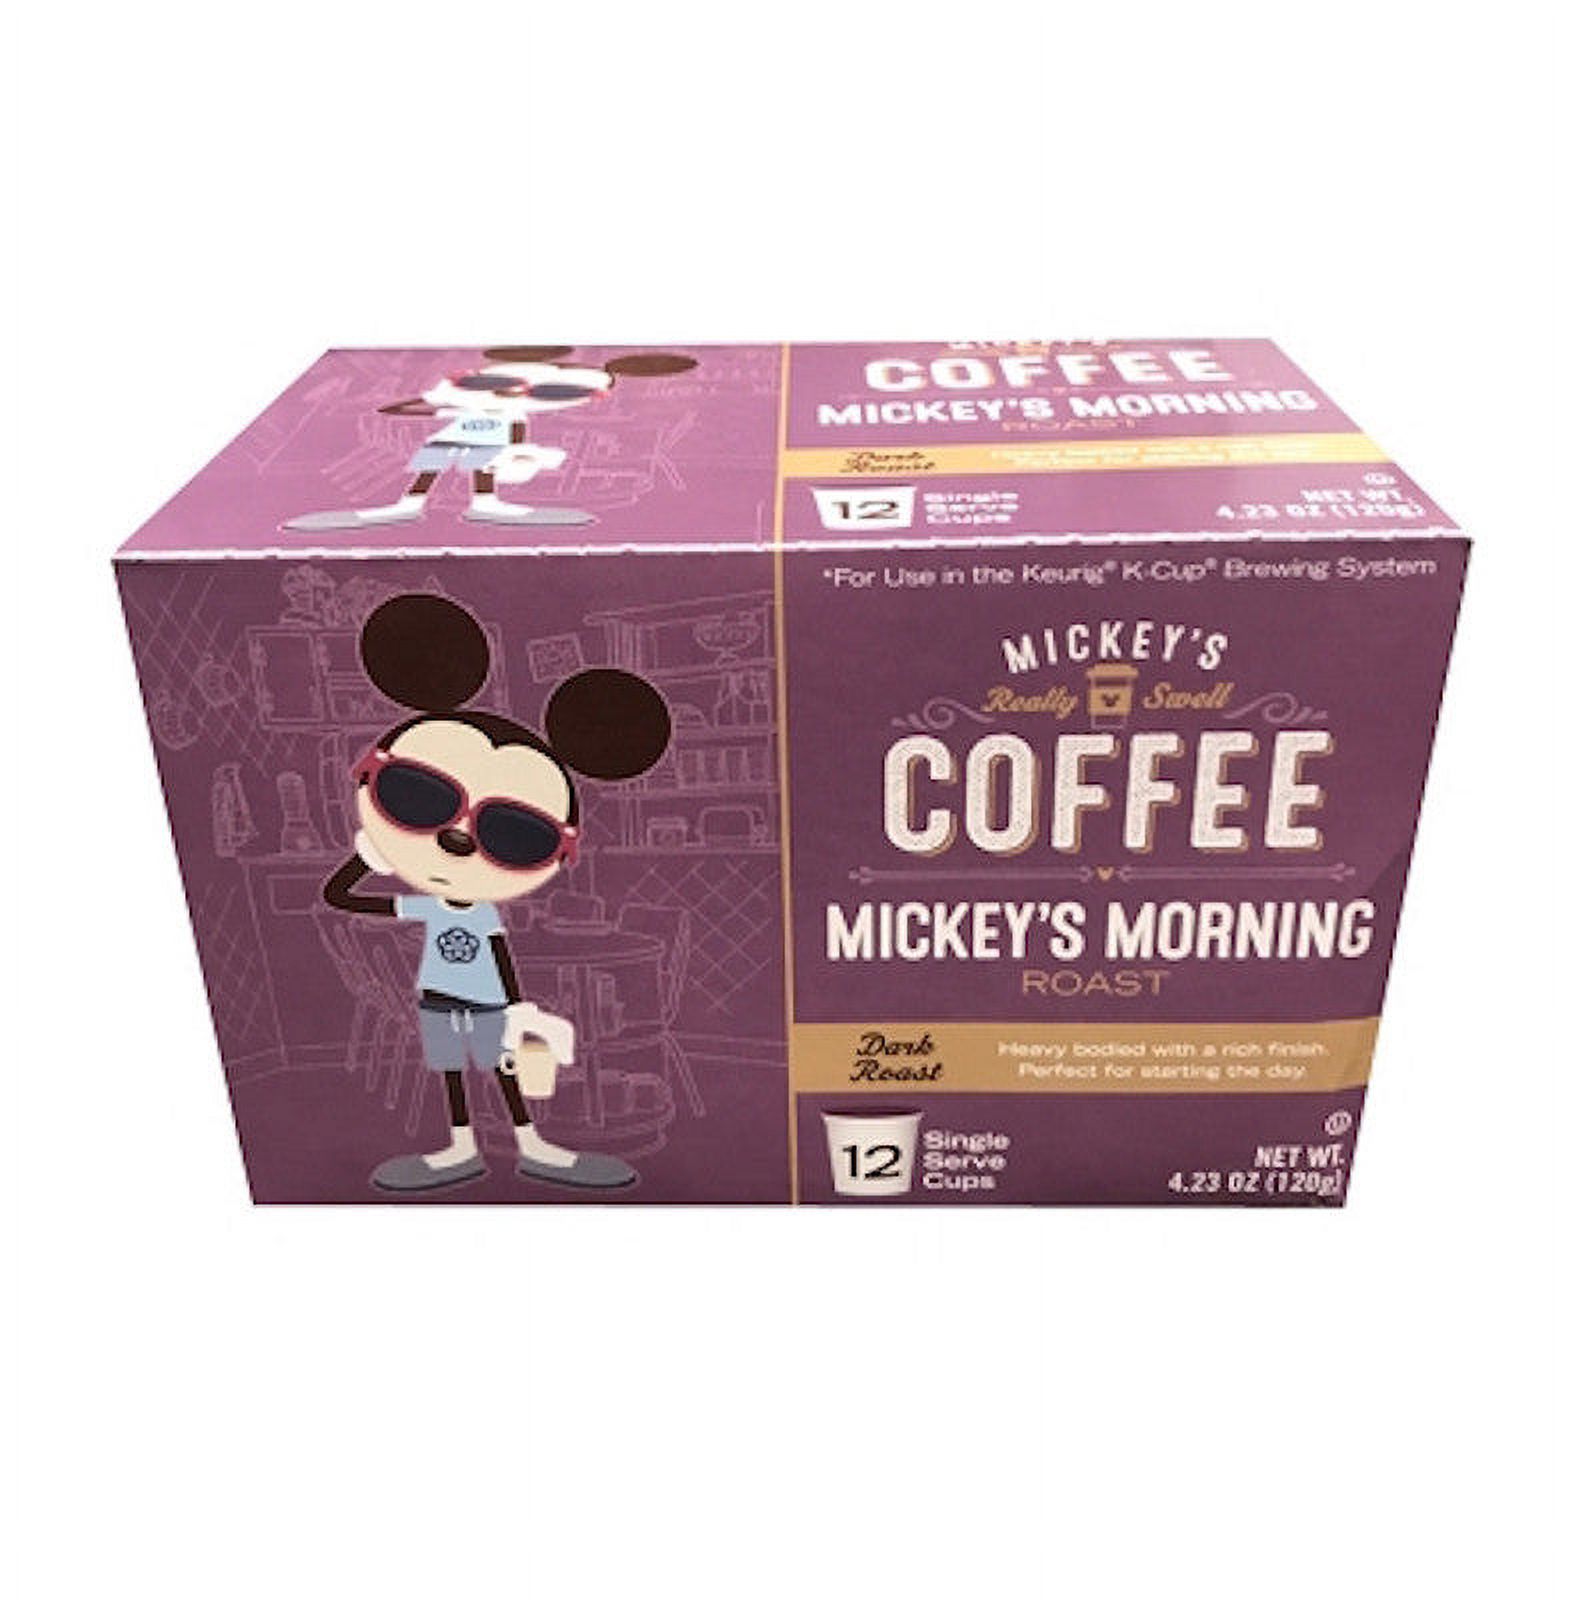 Disney Mickey's Coffee Mickey's Morning Roast 12 Keurig K-Cup New Sealed - image 1 of 3